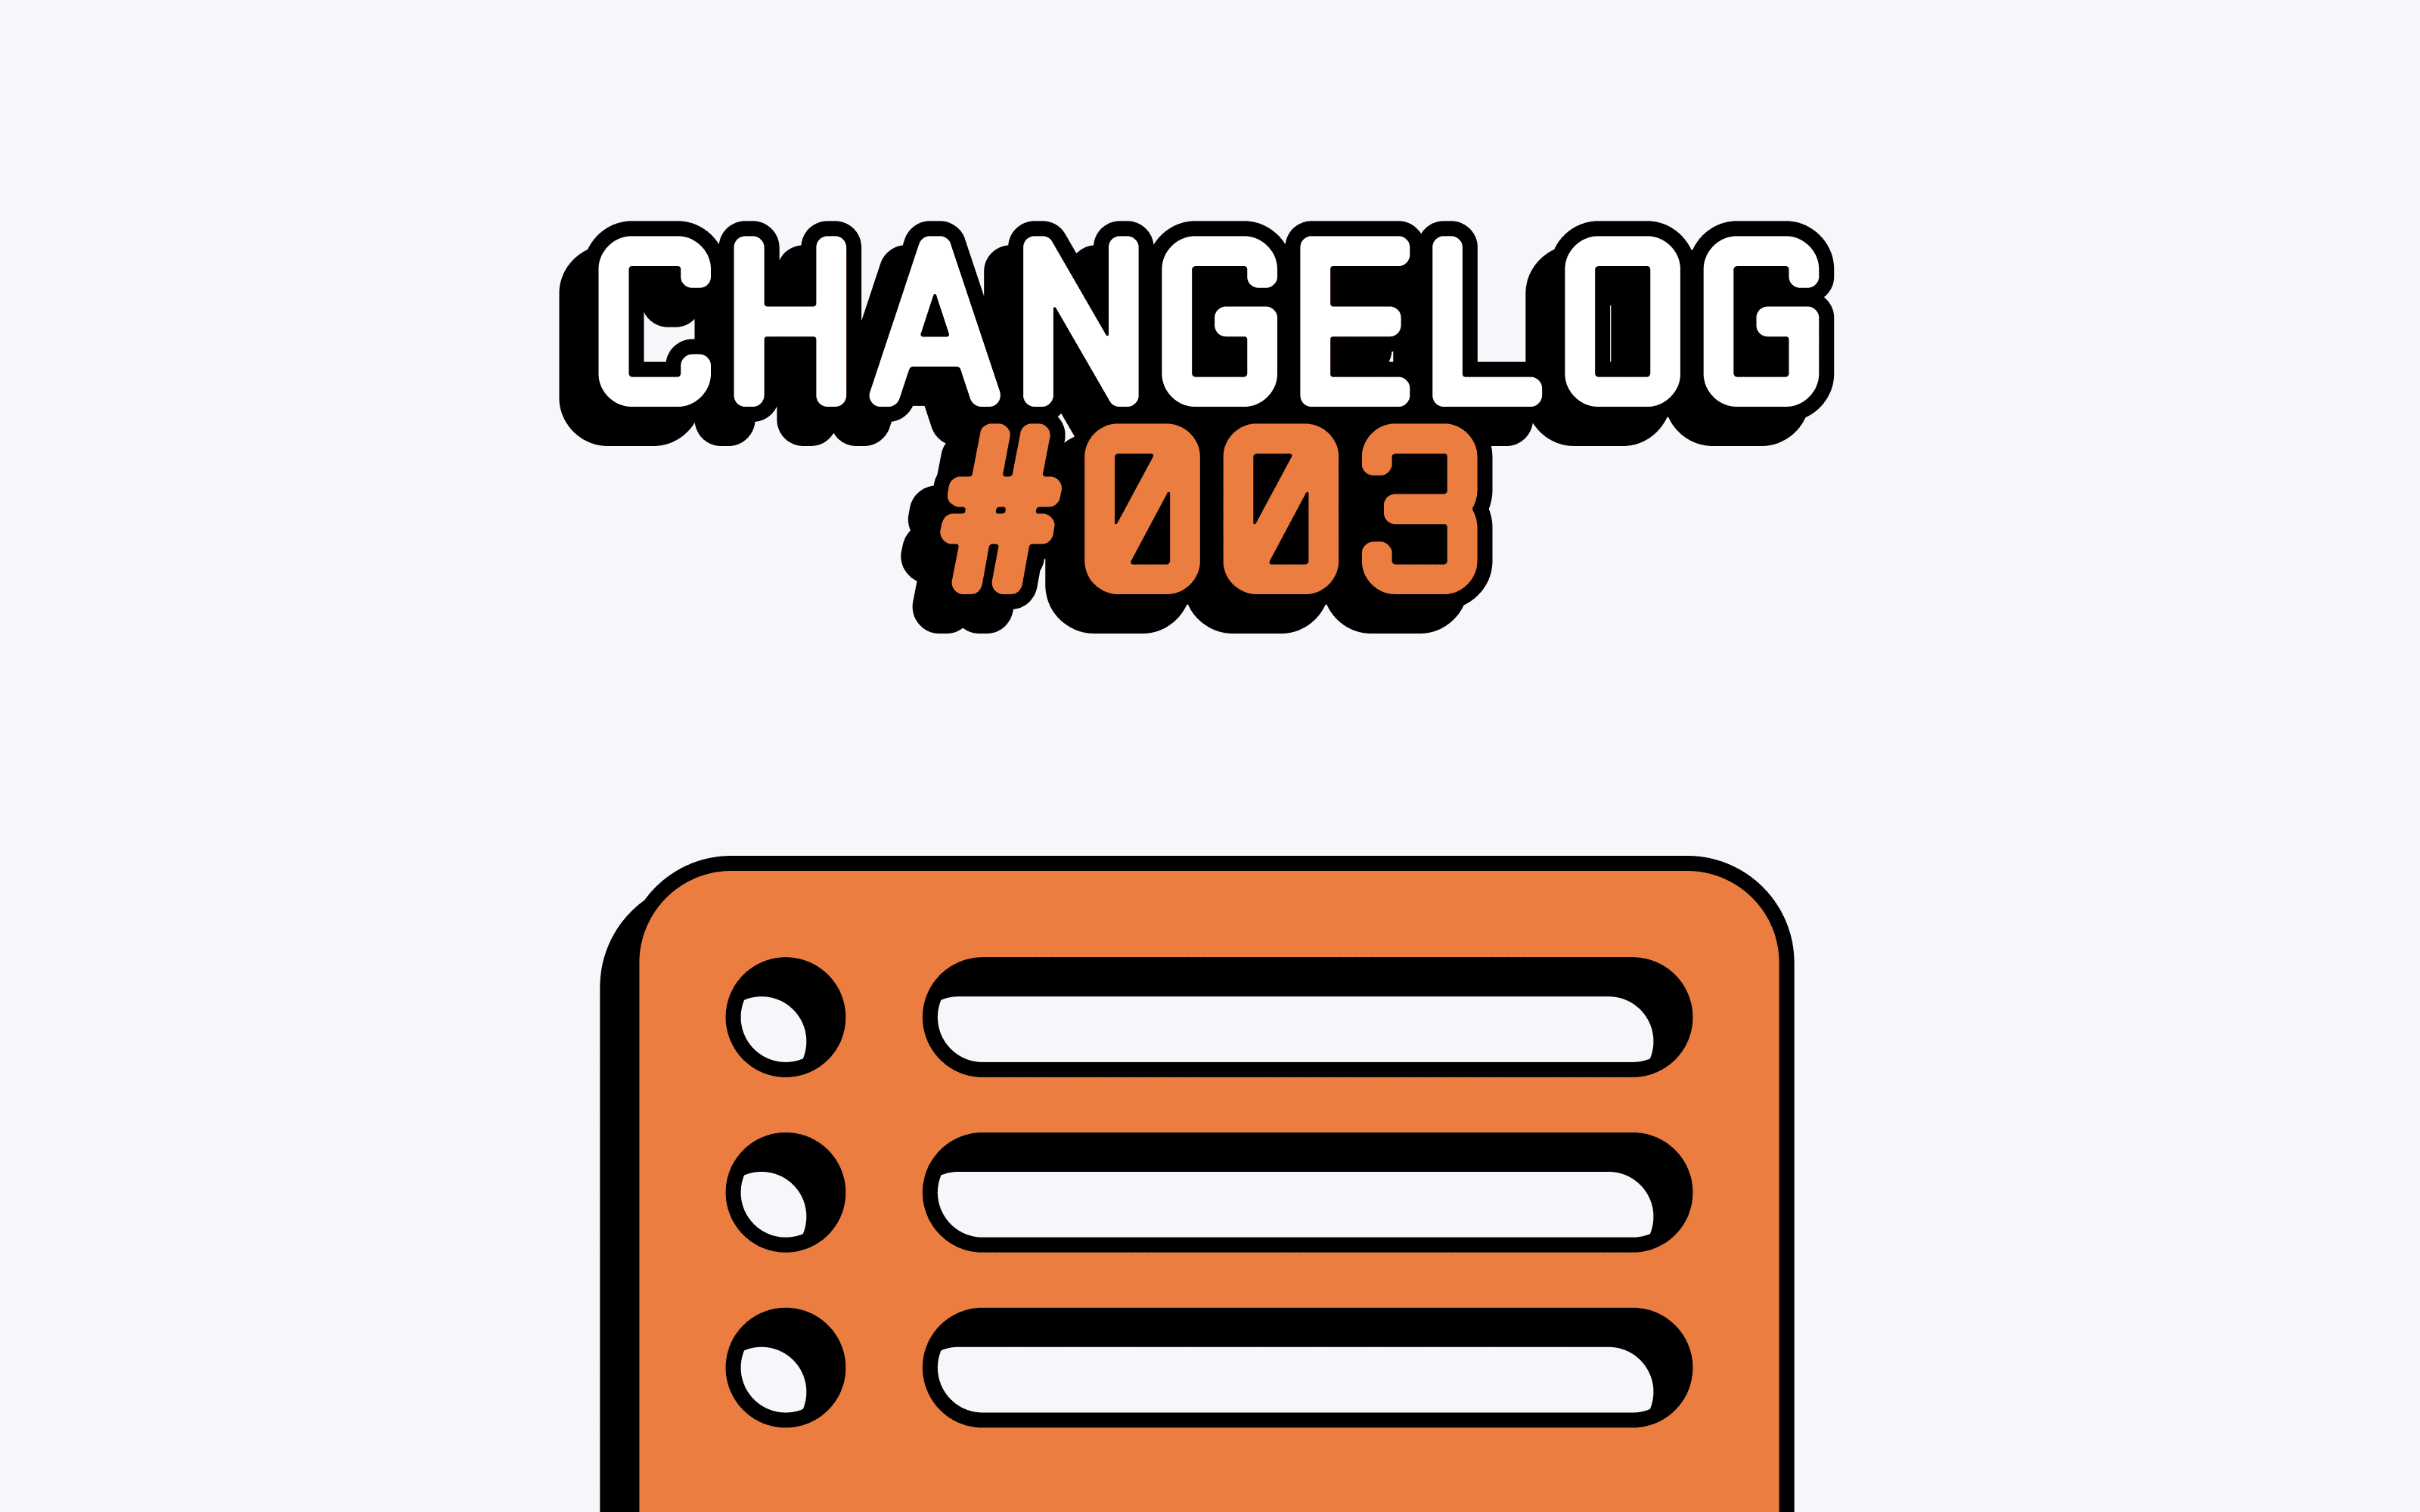 Changelog #003